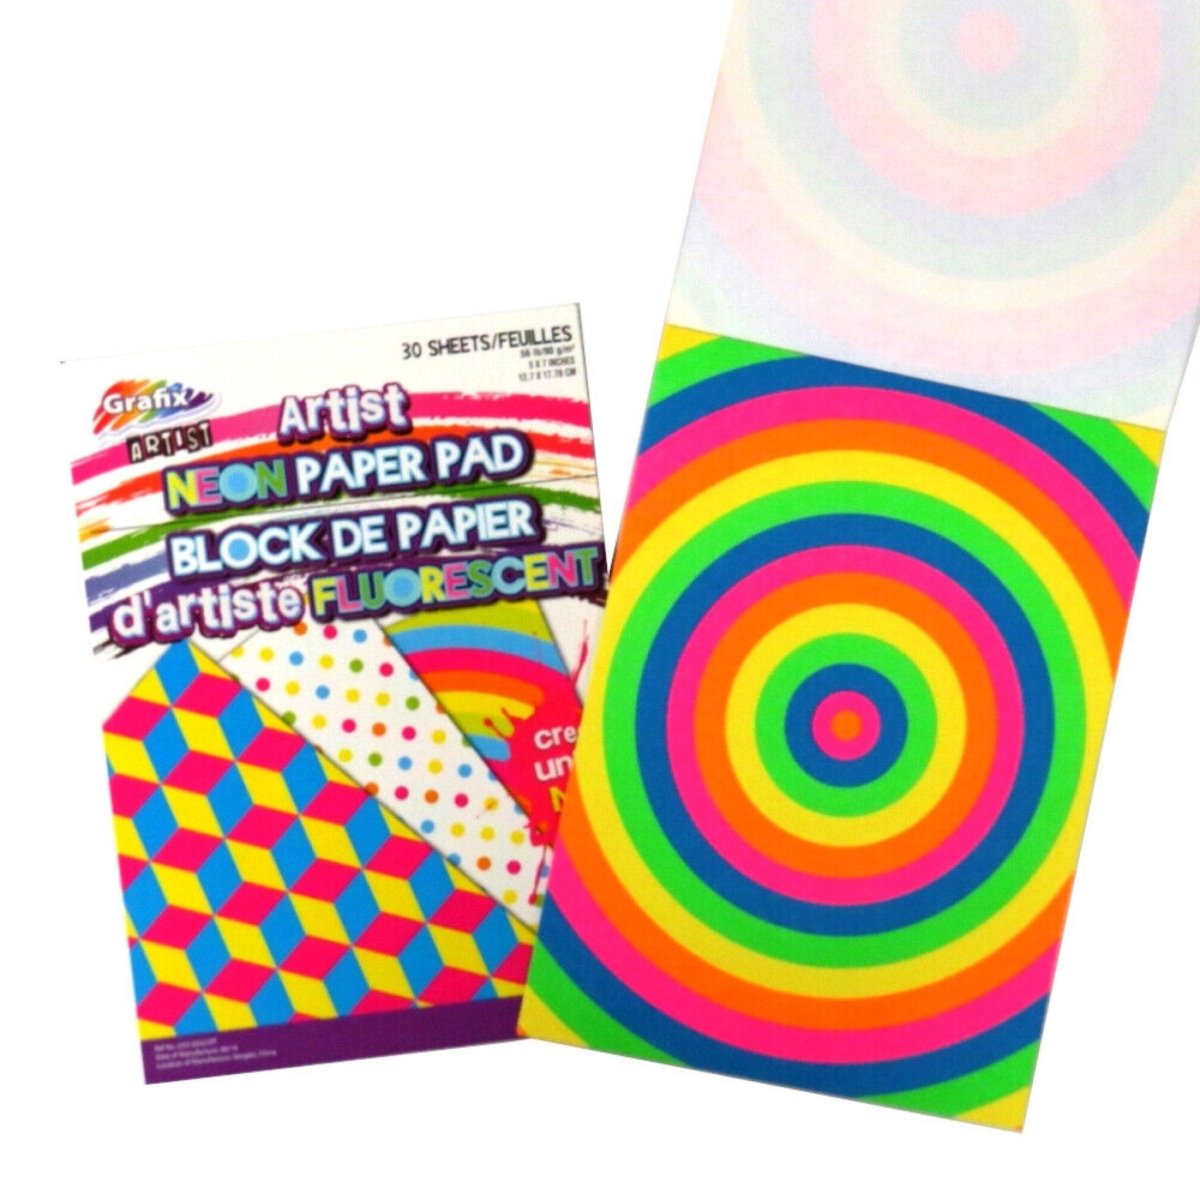 Grafix Neon Paper Pad - Kids Party Craft